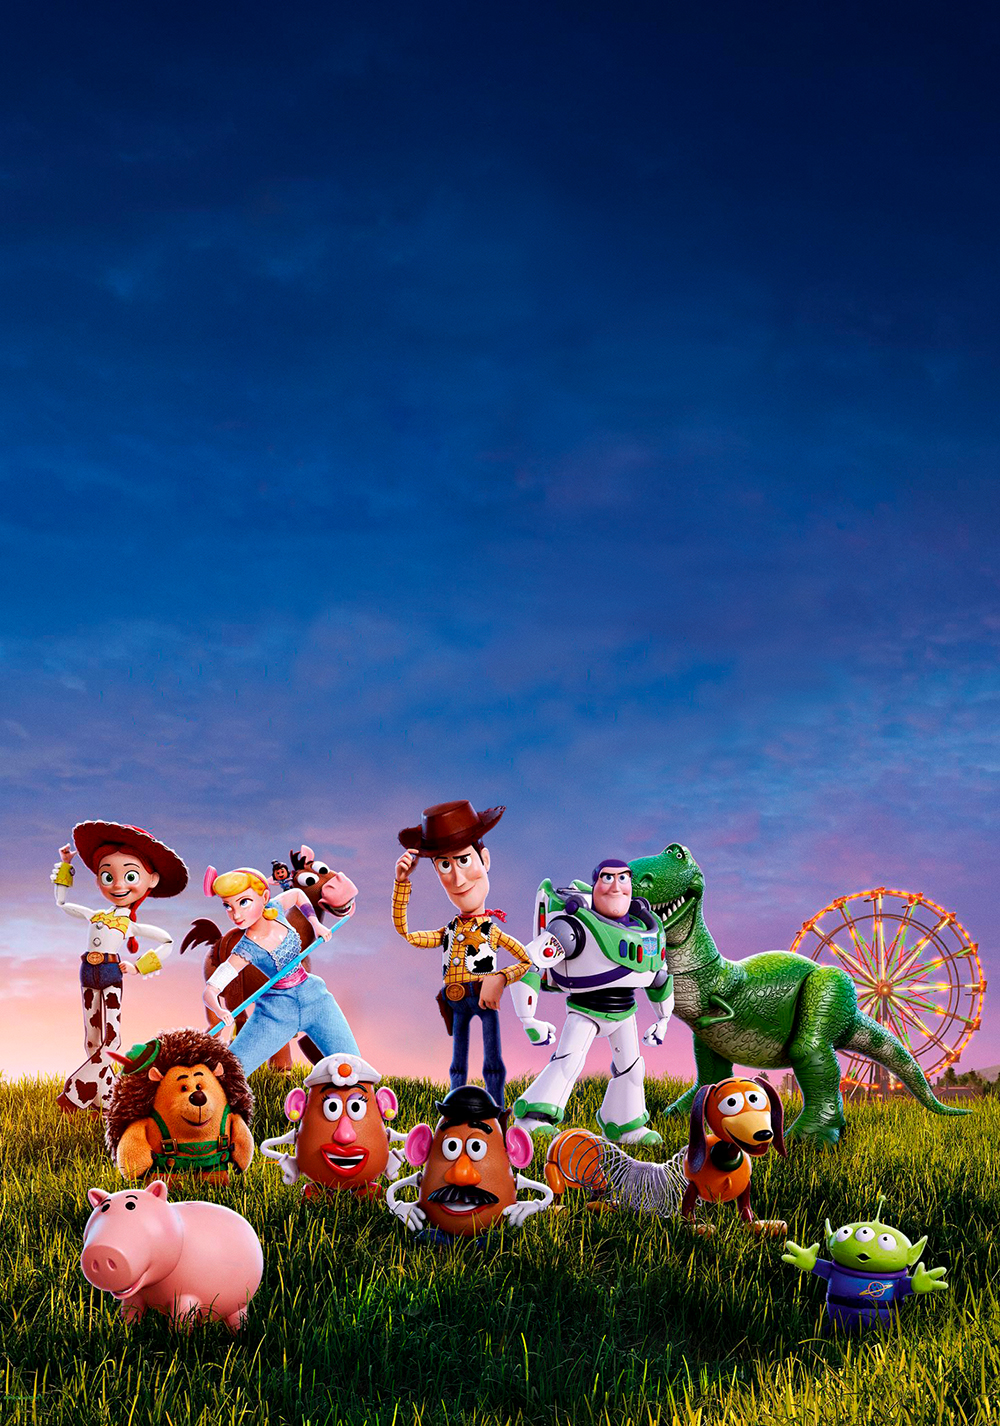 Pôster │ Toy Story 4 (2019) - LOUCADEMIA DE CINEMA